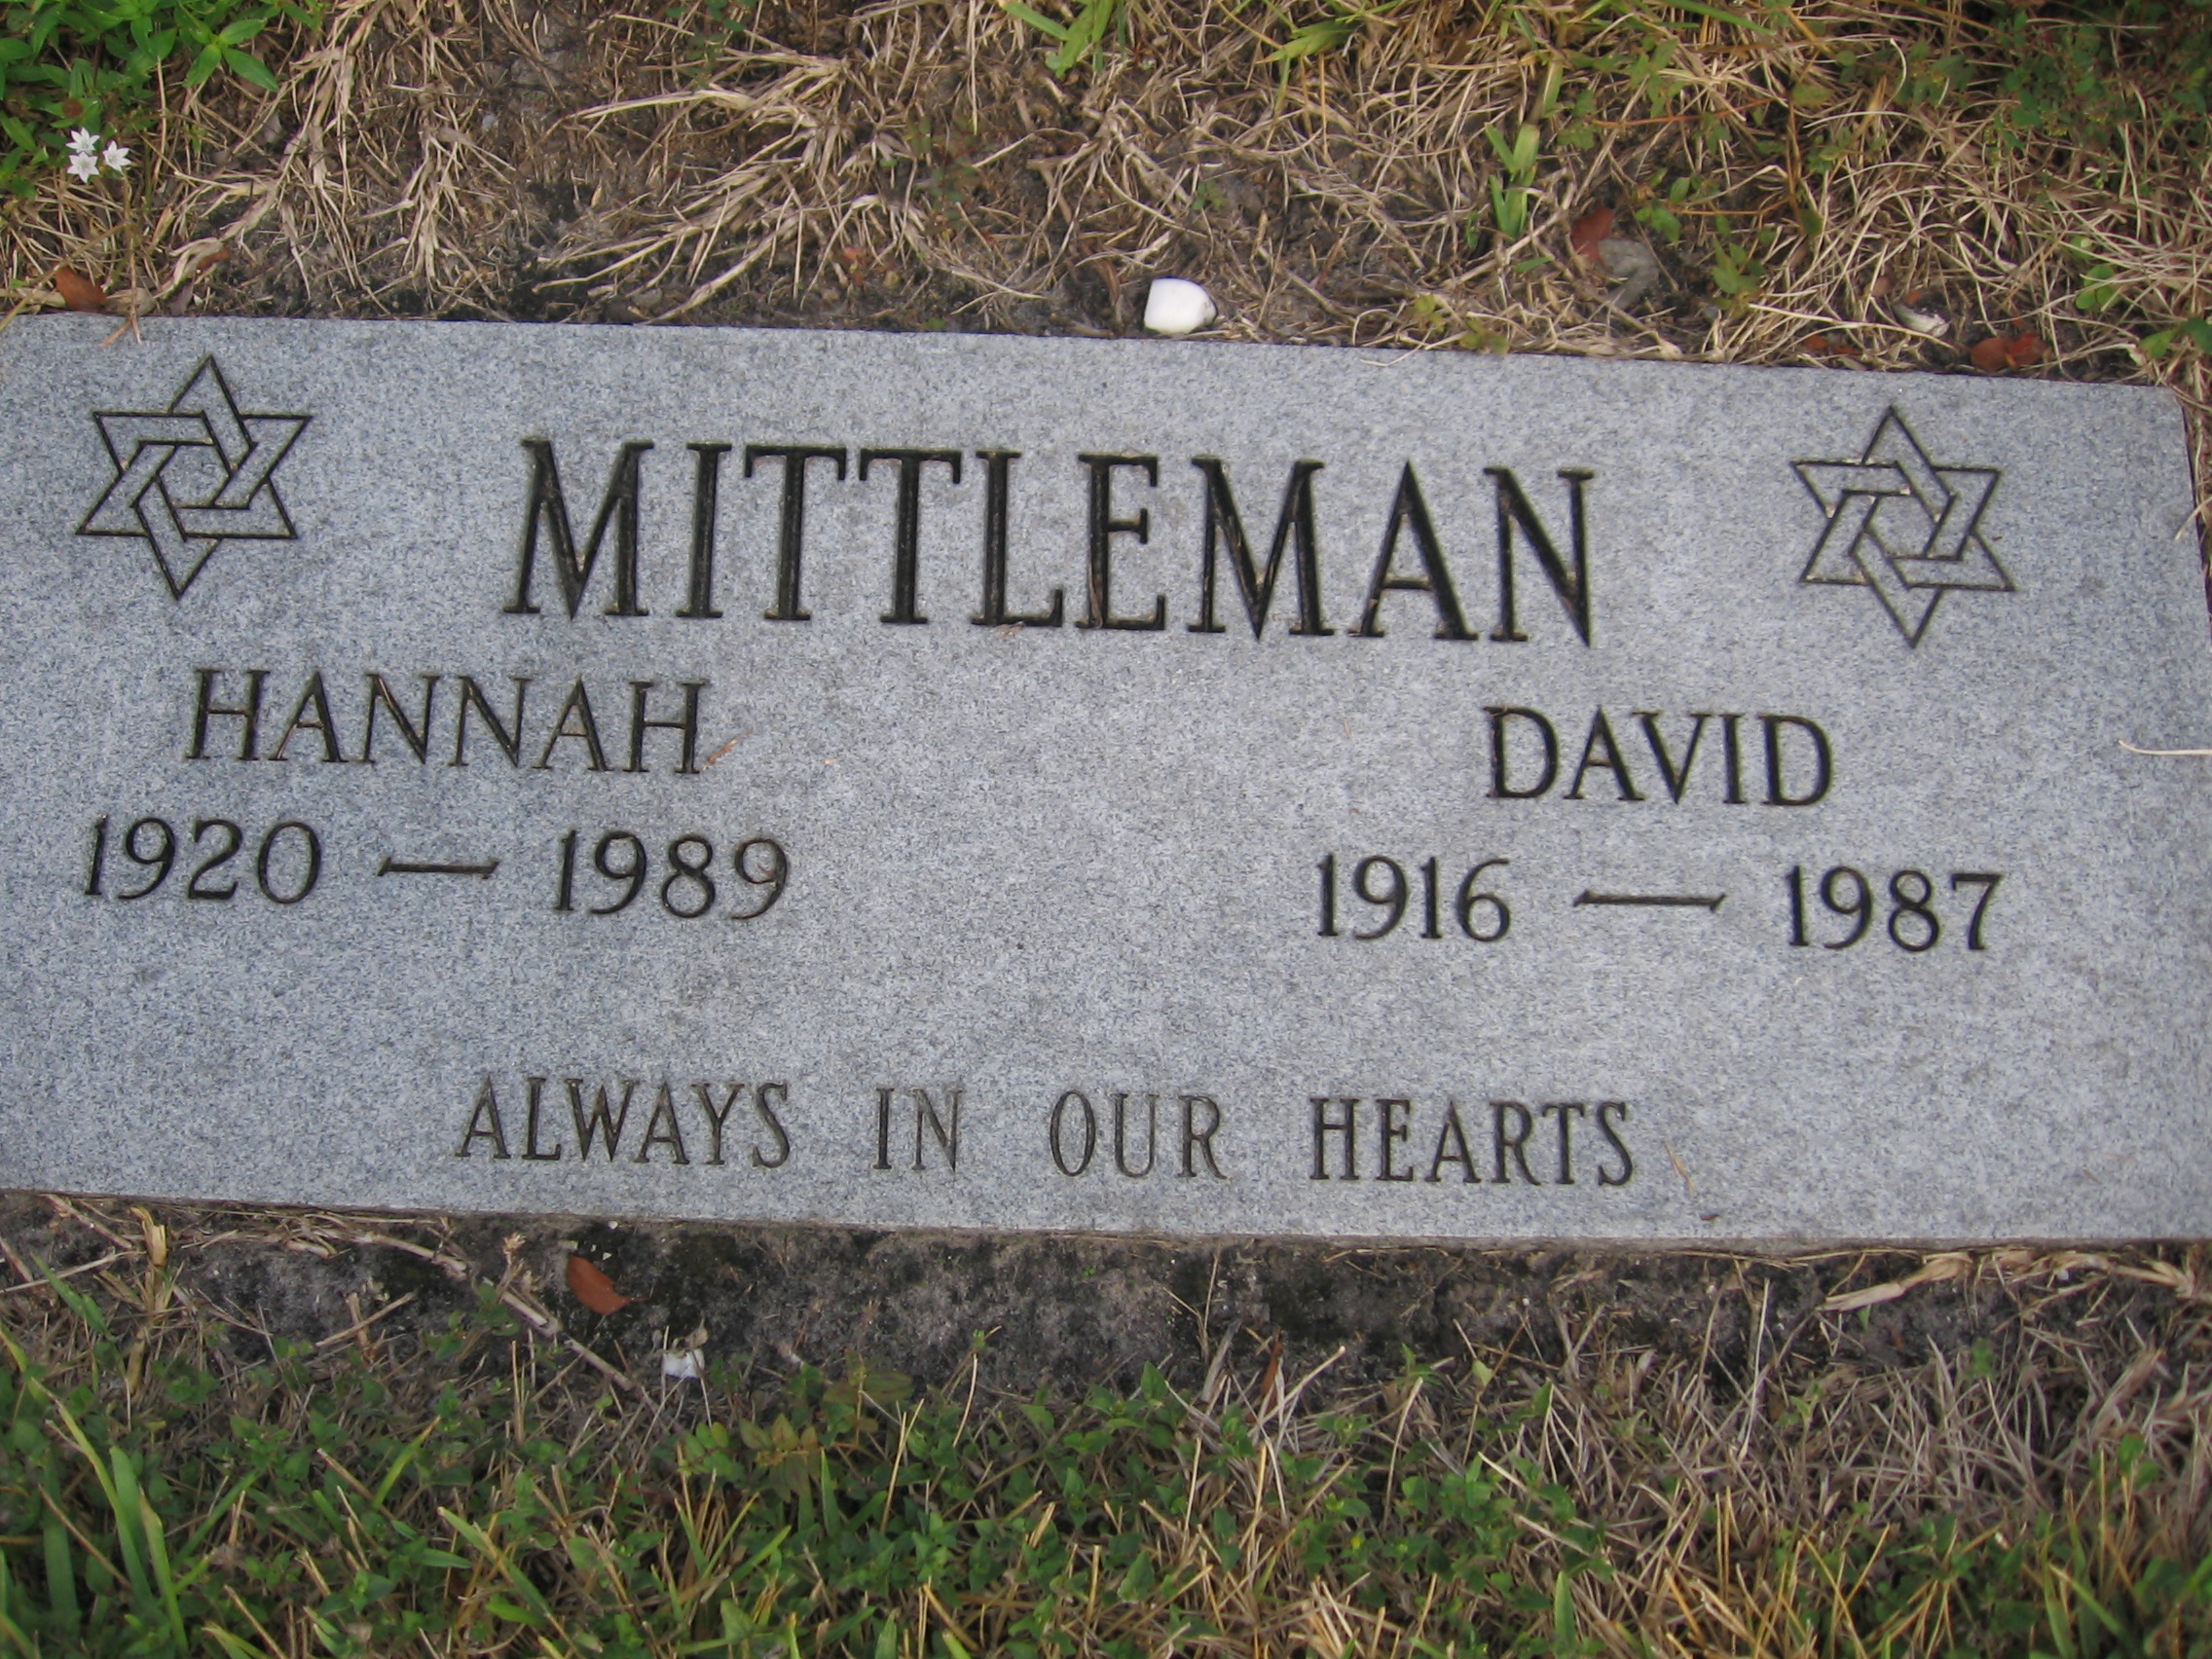 David Mittleman